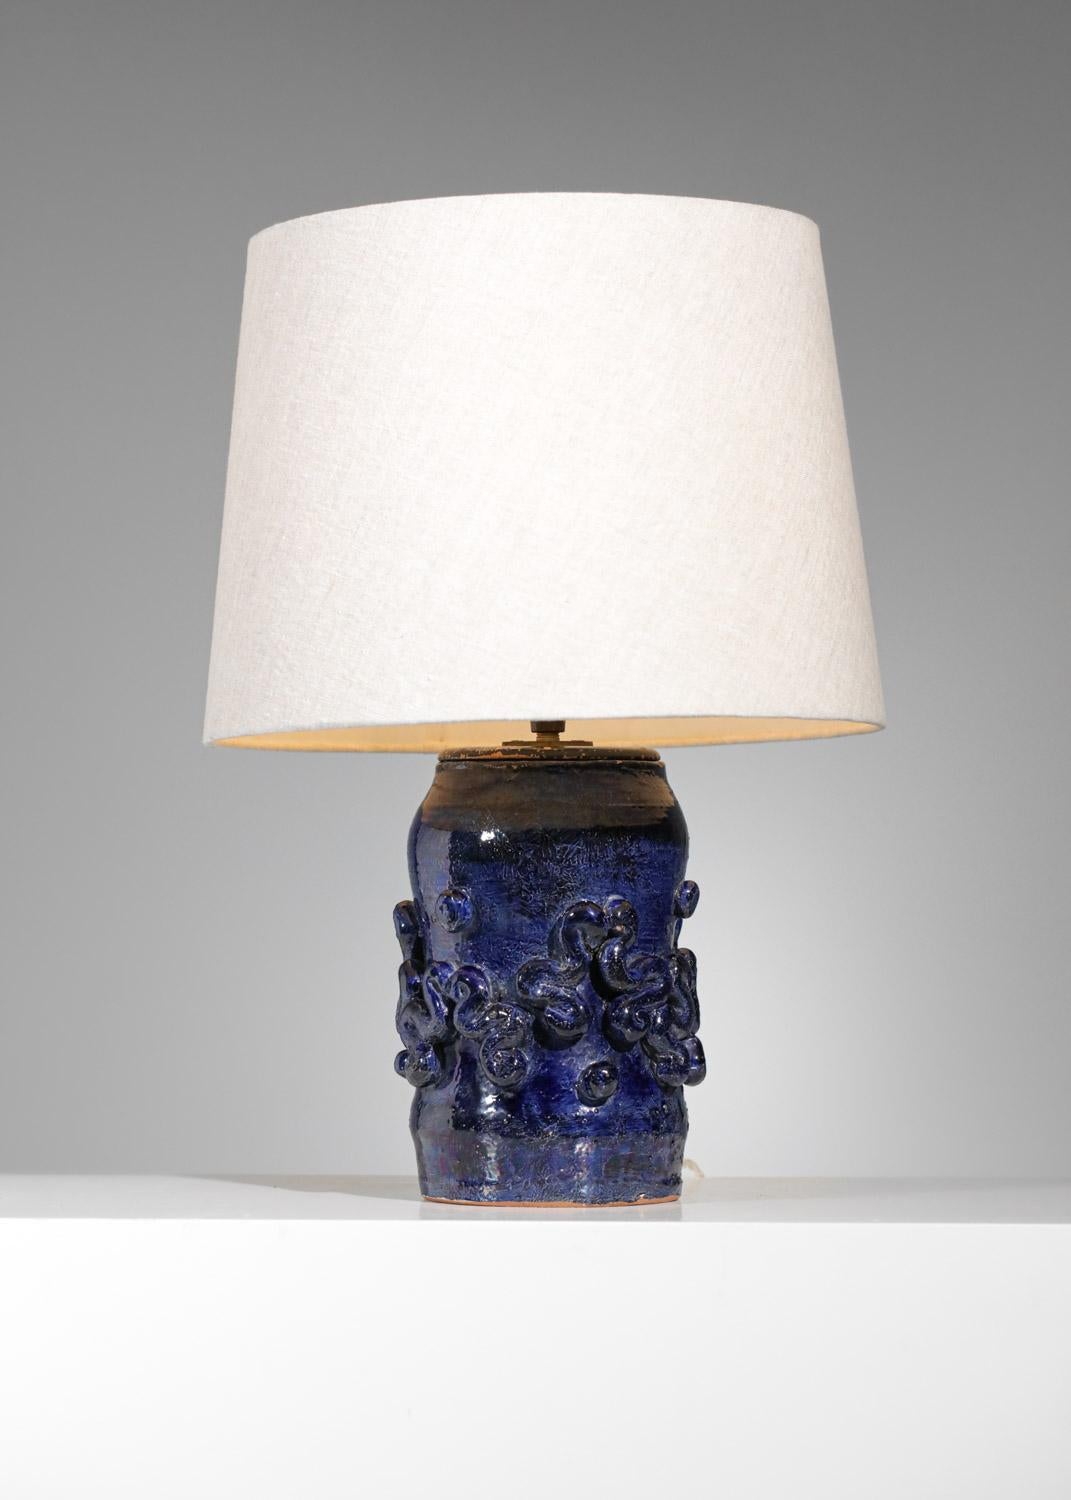 French Blue Ceramic Lamp Base Jean Austruy 50's - G446 For Sale